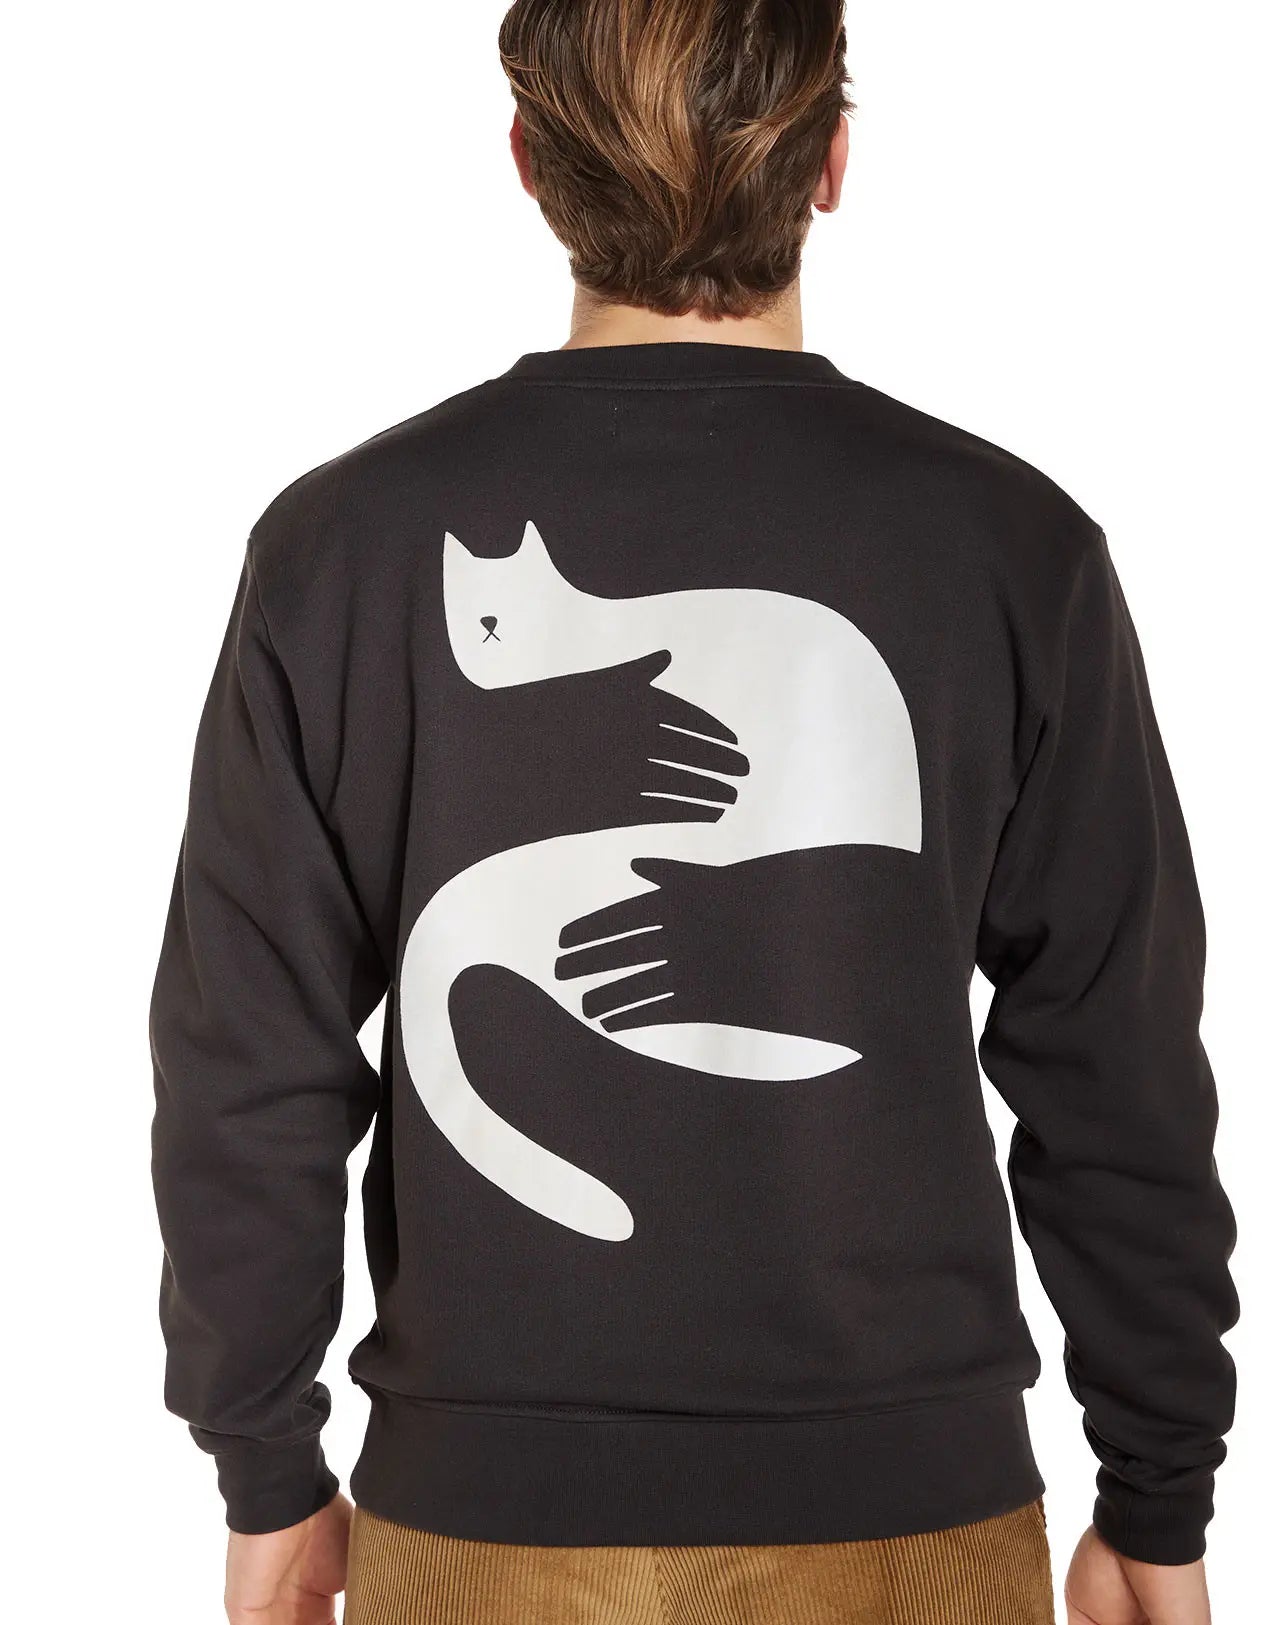 Cat Hug Sweater Black